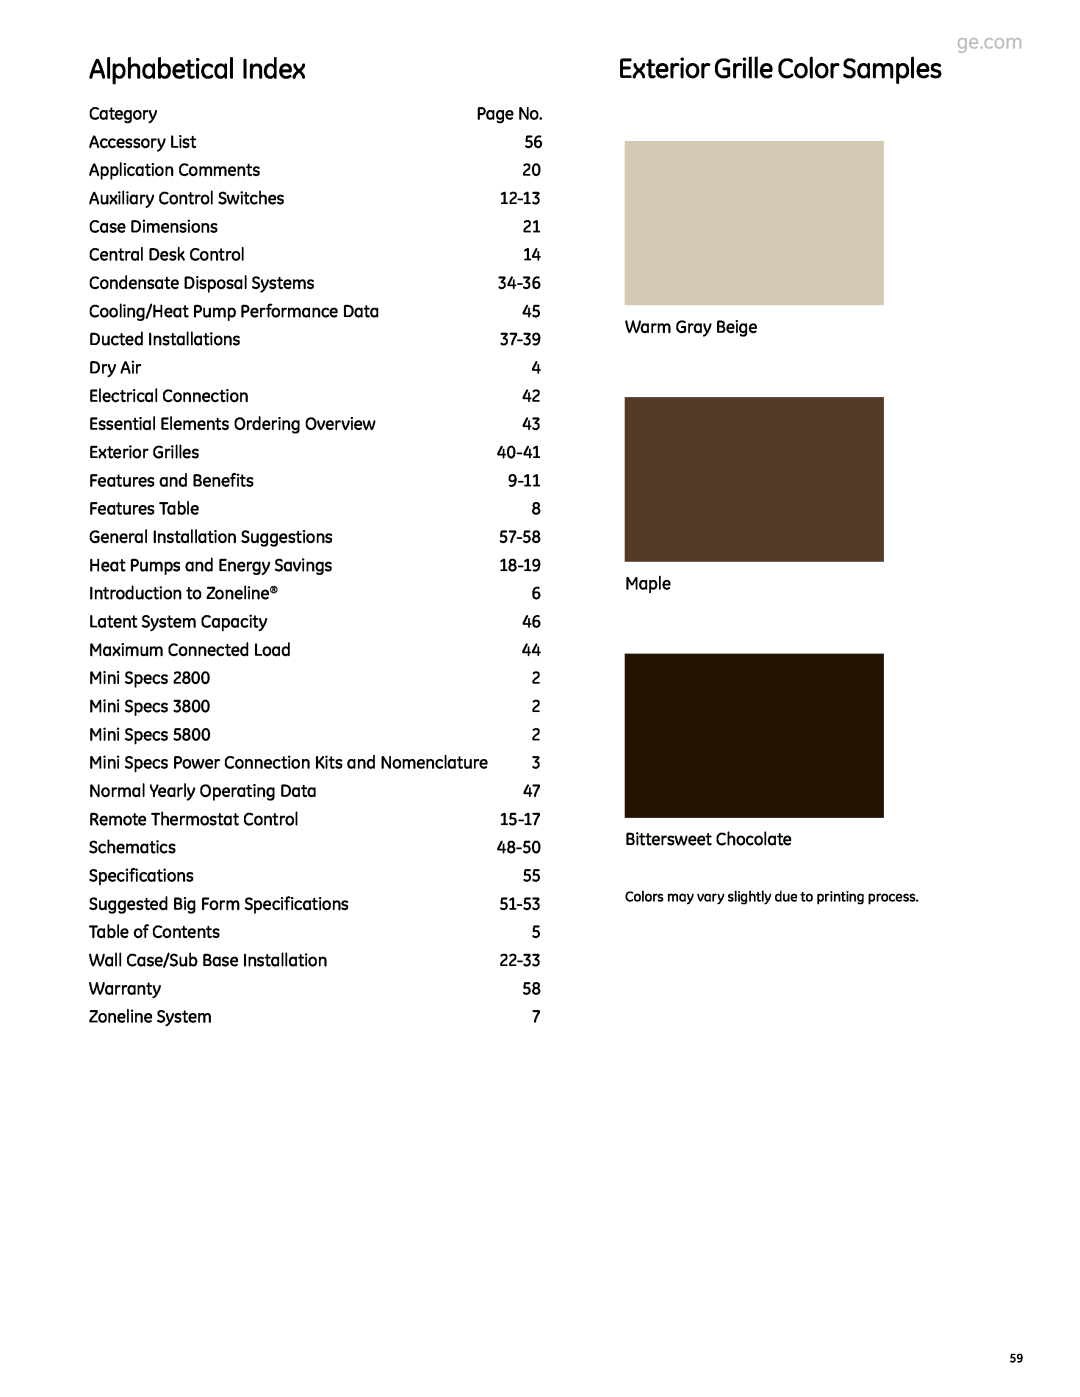 GE 2800 manual Alphabetical Index, Exterior Grille Color Samples 